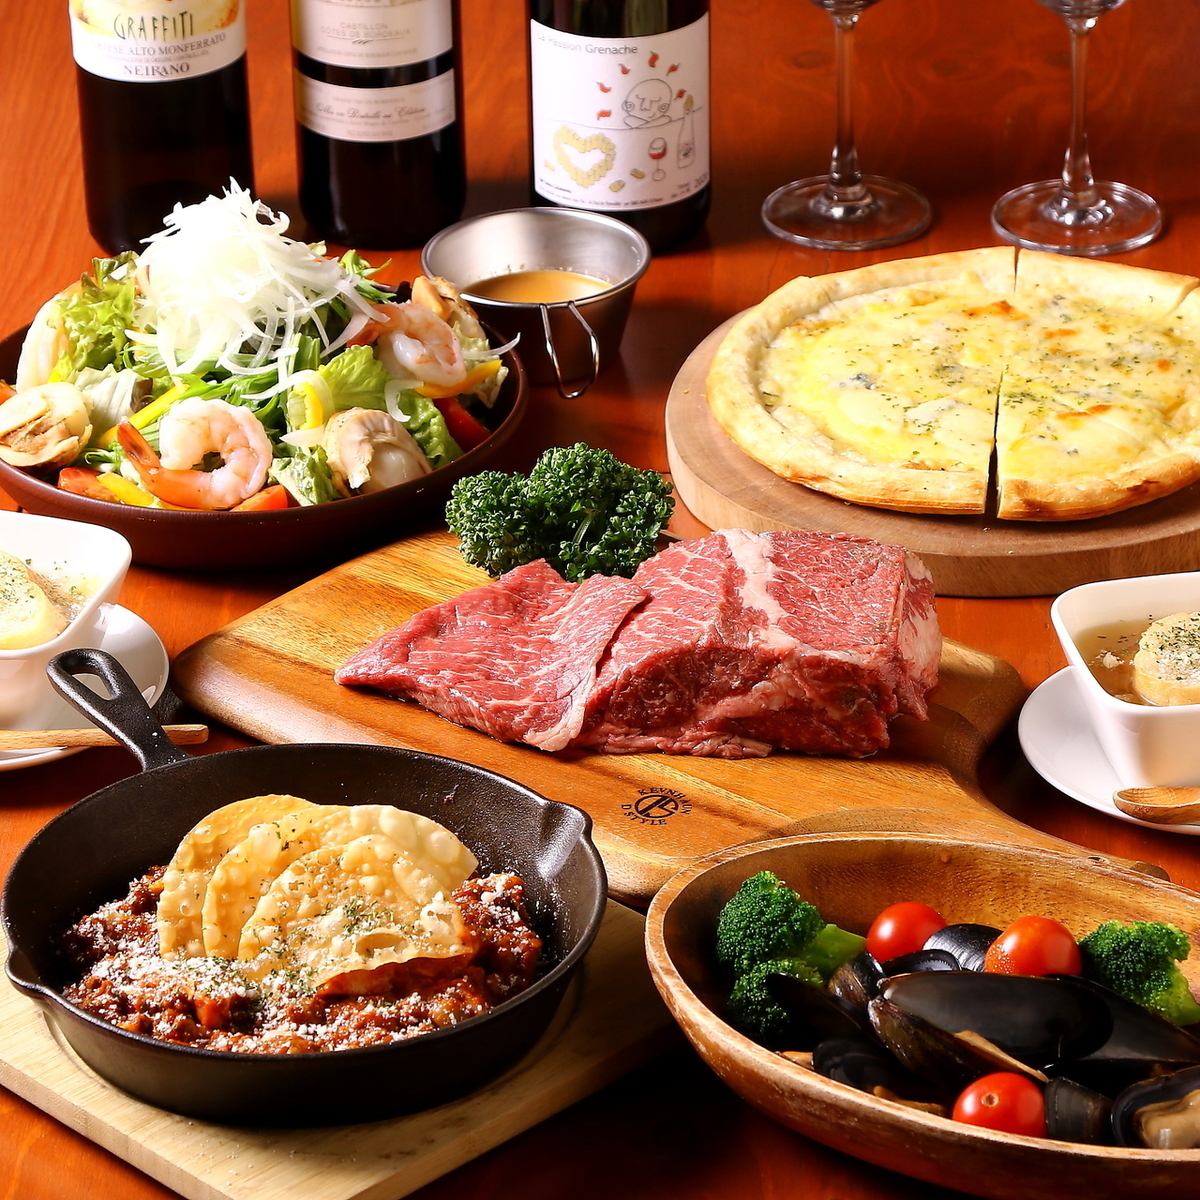 Plate with Ibaraki prefecture's [Bimei pork loin] and sausage